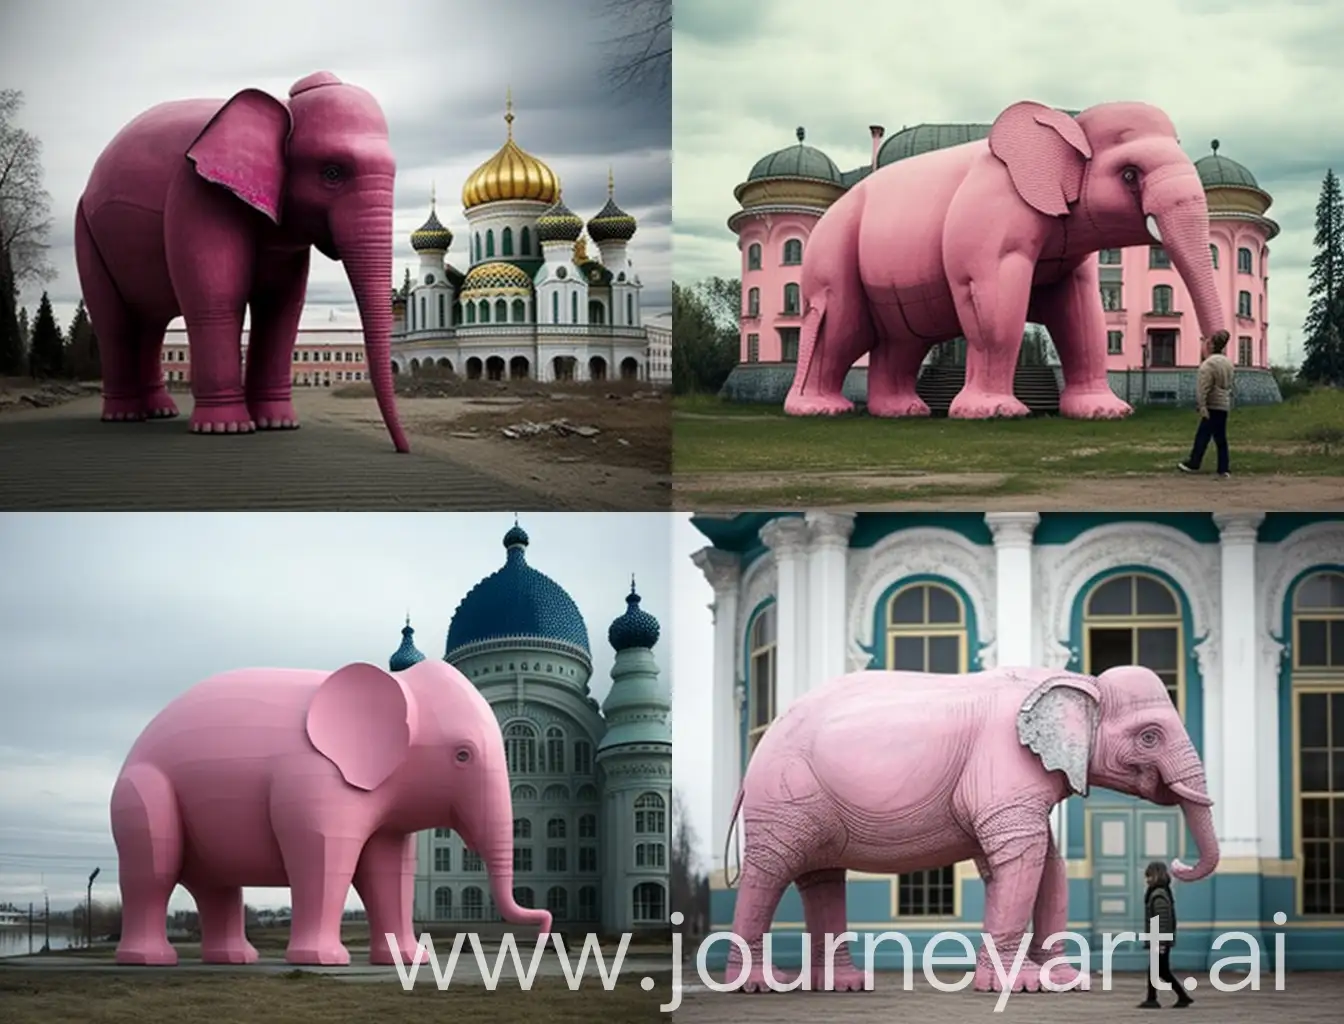 Vibrant-Pink-Elephant-Sculpture-in-Russian-Landscape